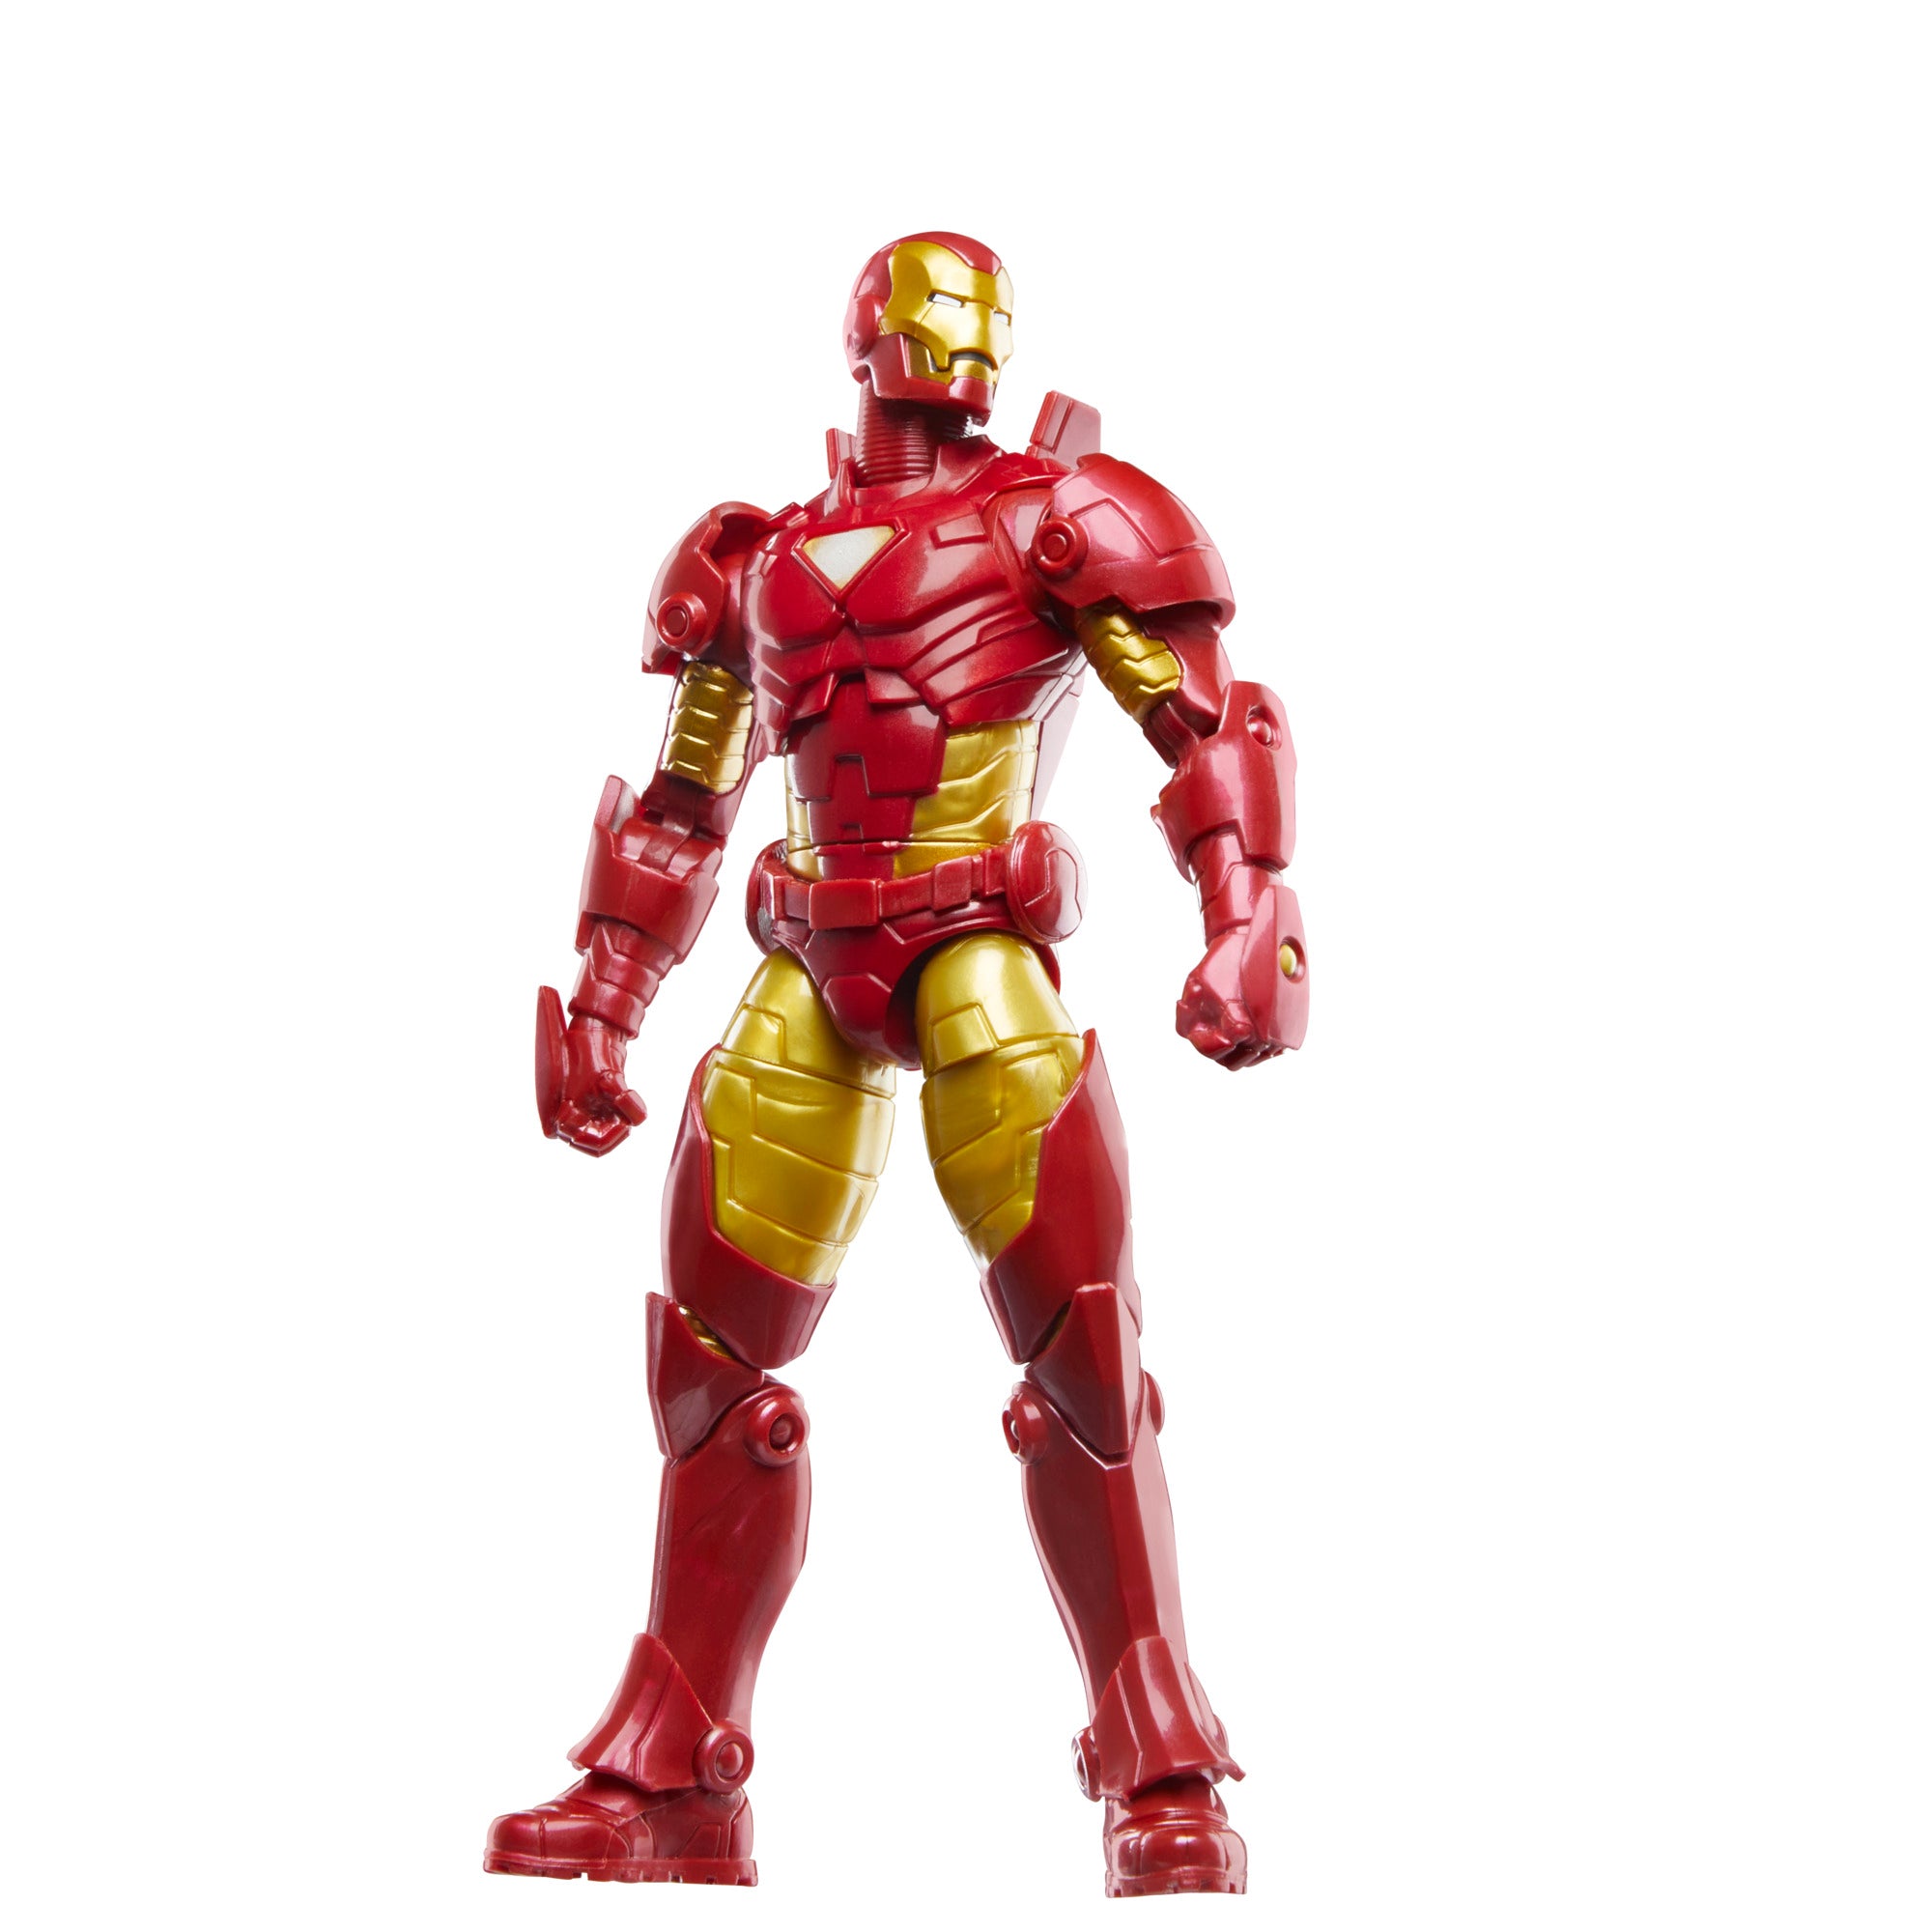 Marvel Legends Classic: Iron Man - Iron Man Modelo 20